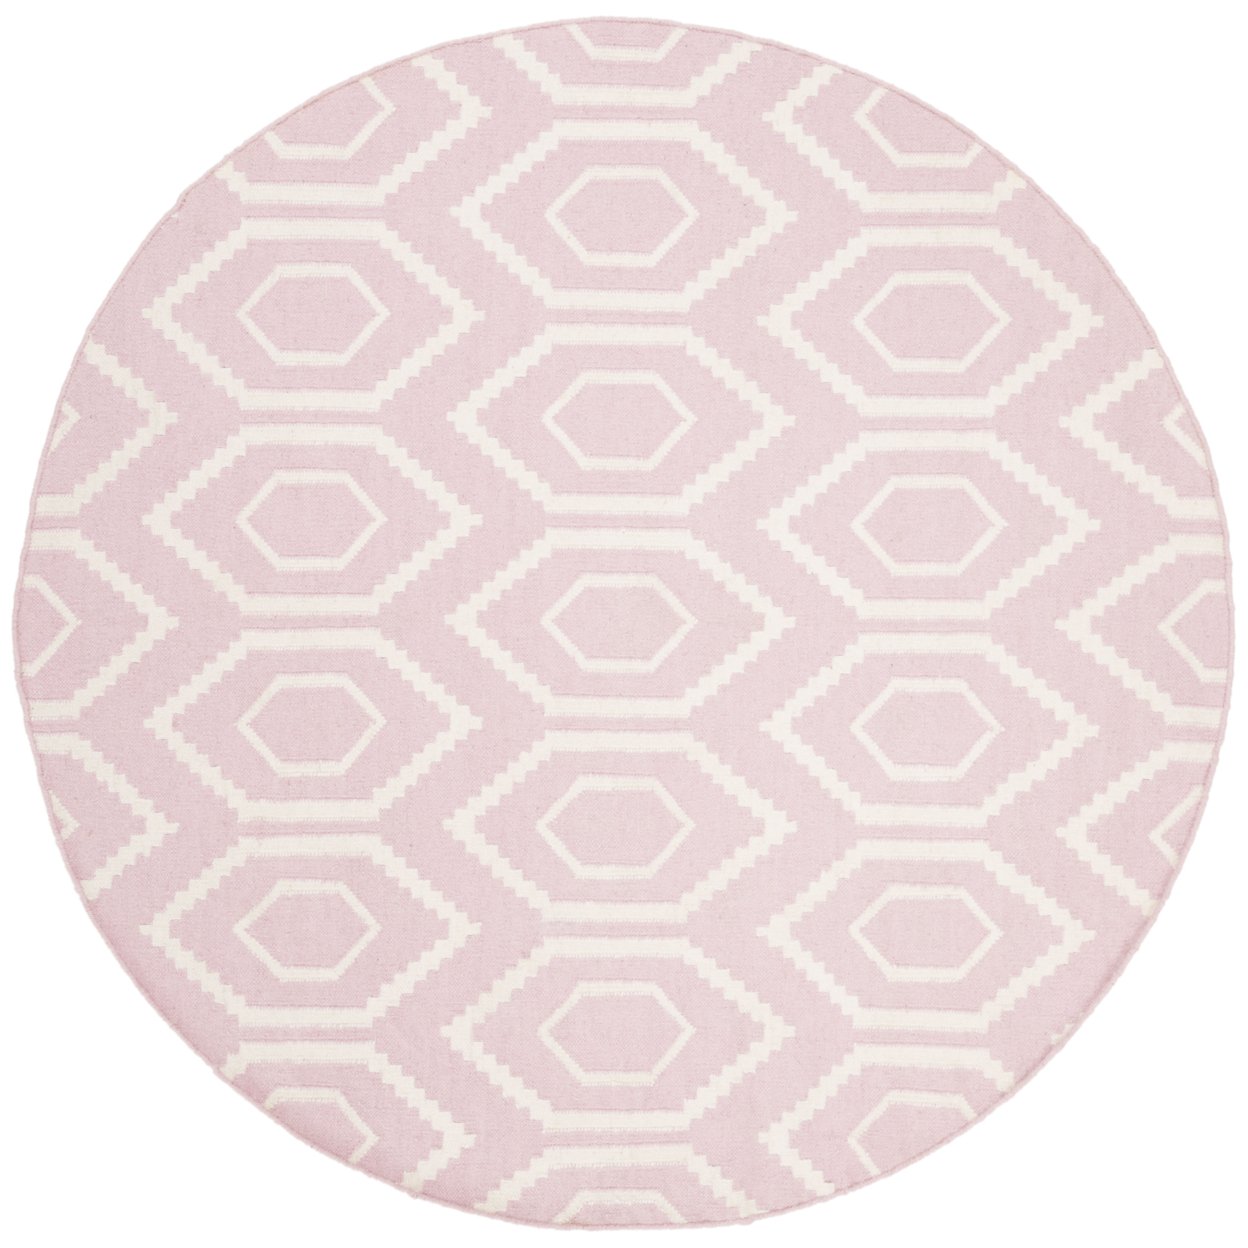 SAFAVIEH DHU556C Dhurries Pink / Ivory - 2' 6 X 8'